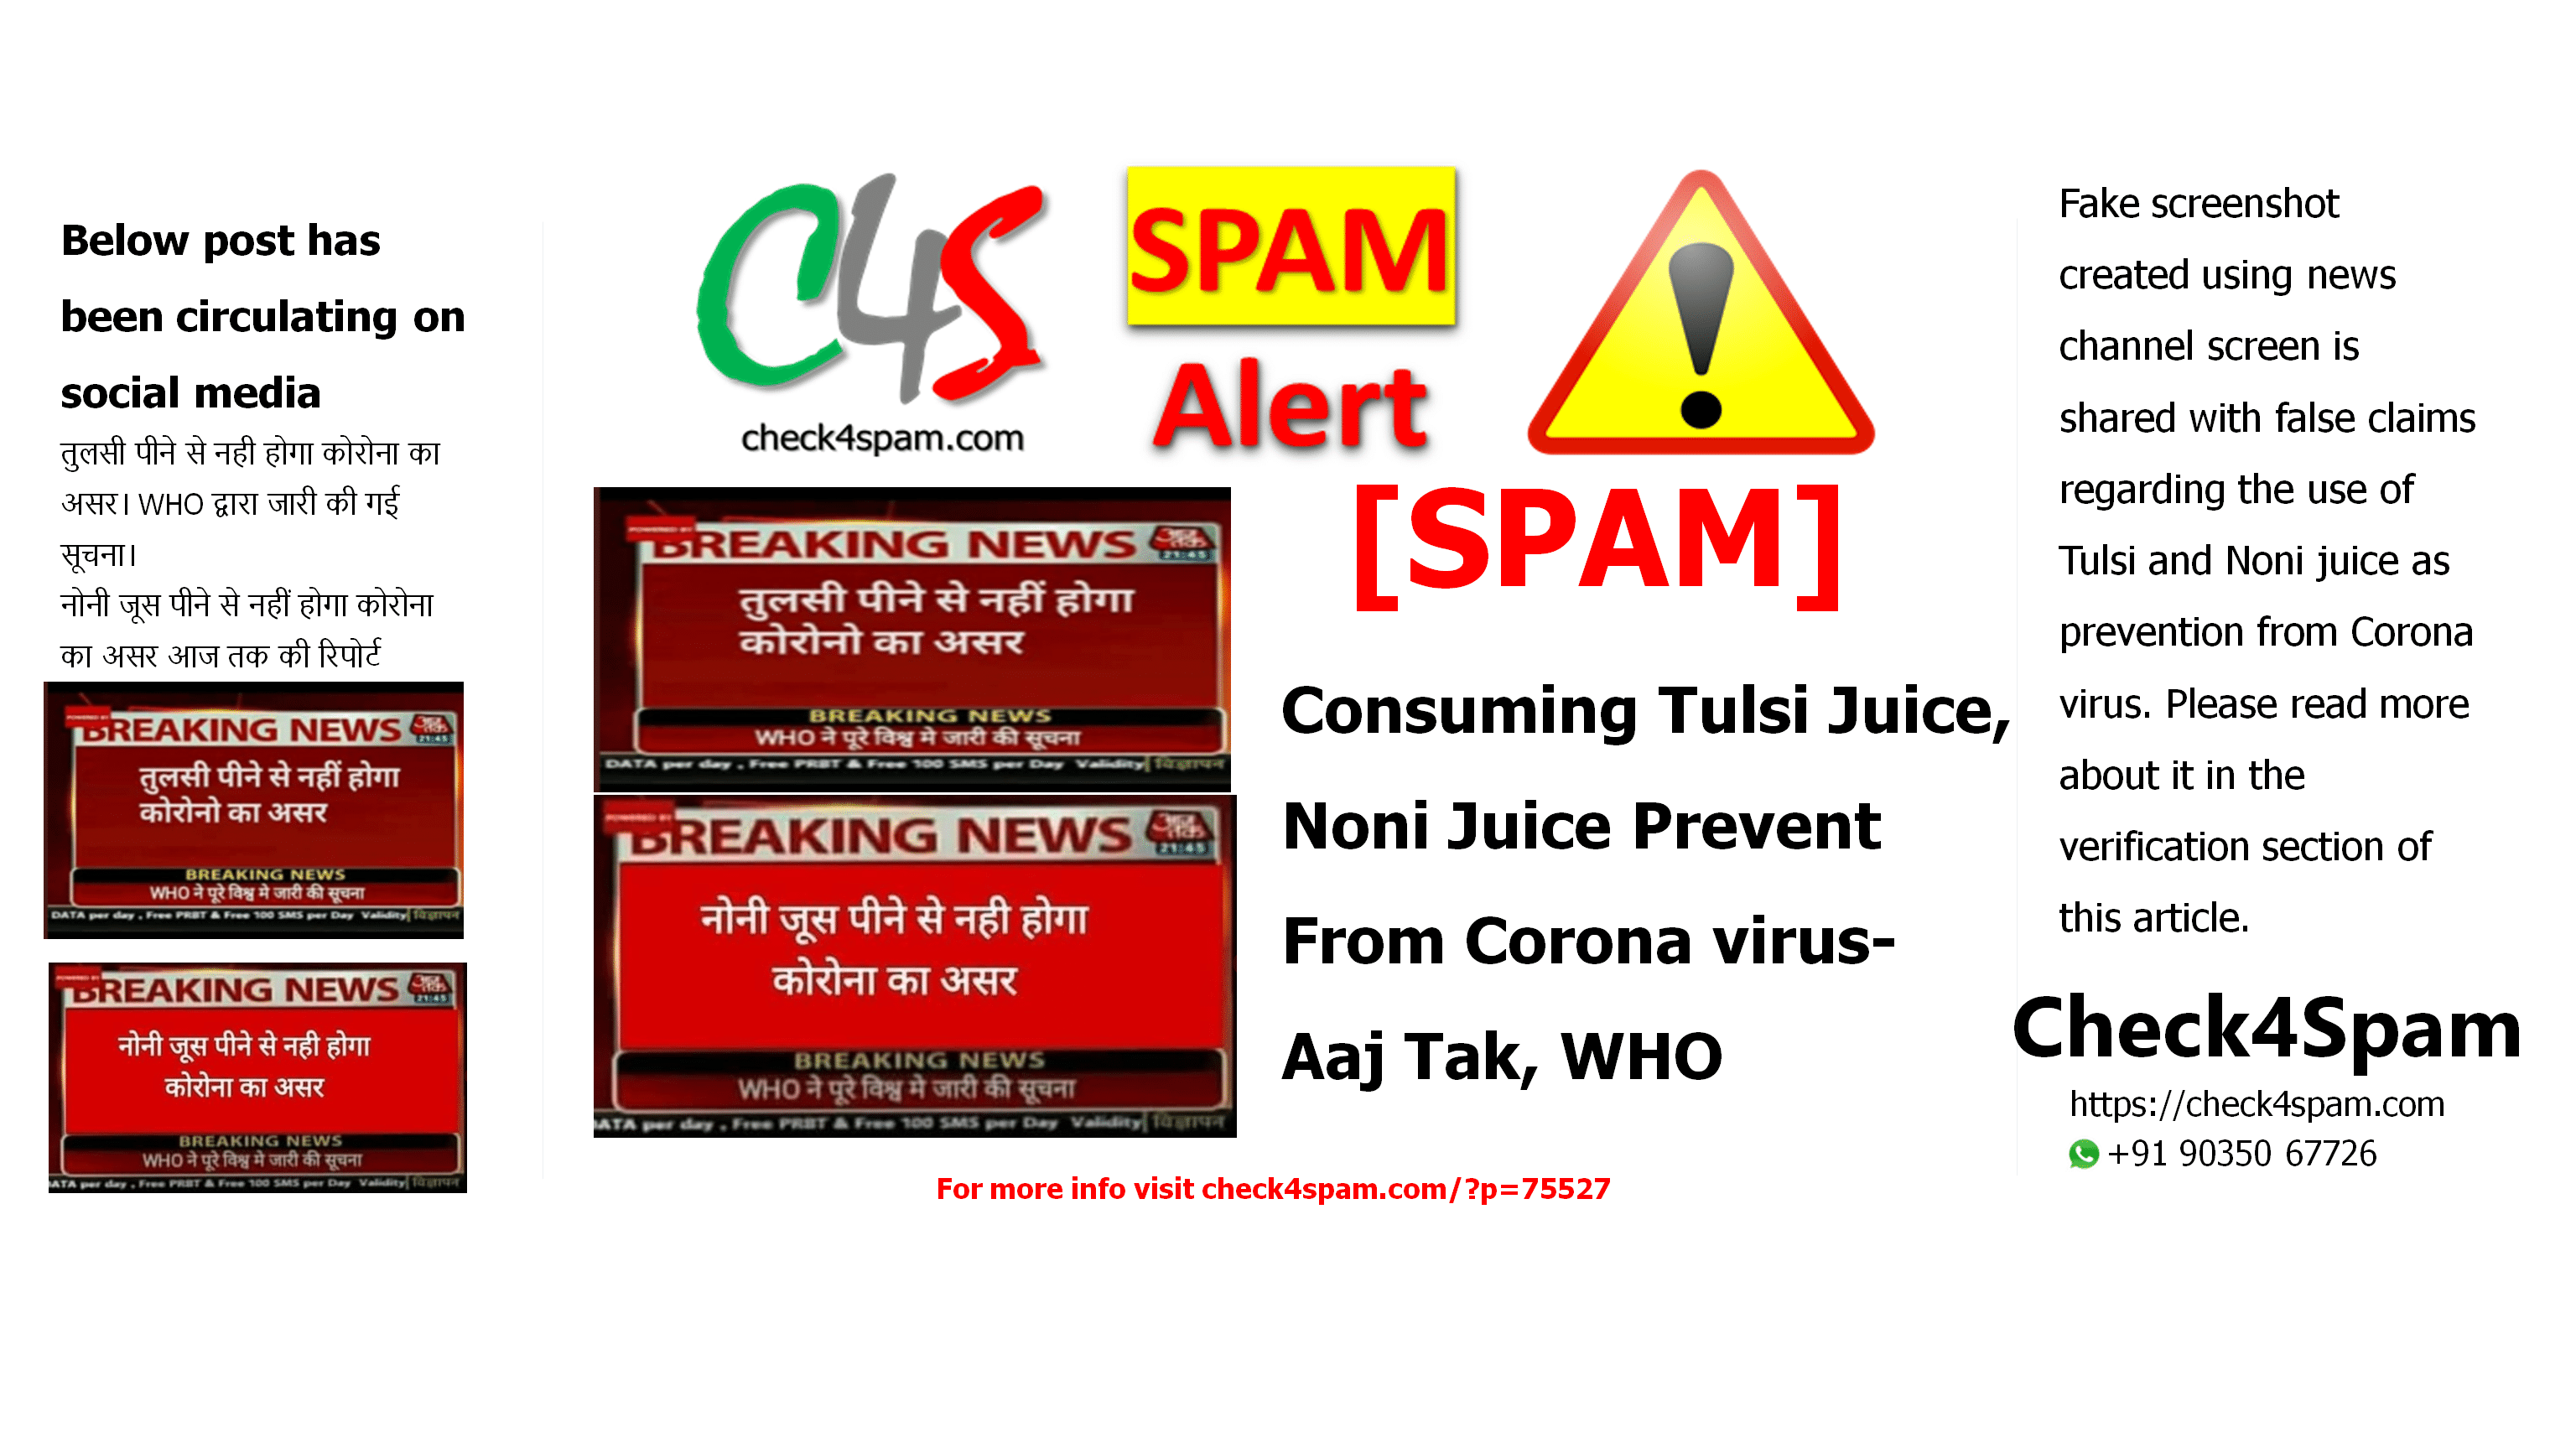 Consuming Tulsi Juice, Noni Juice Prevent From Coronavirus- Aaj Tak, WHO